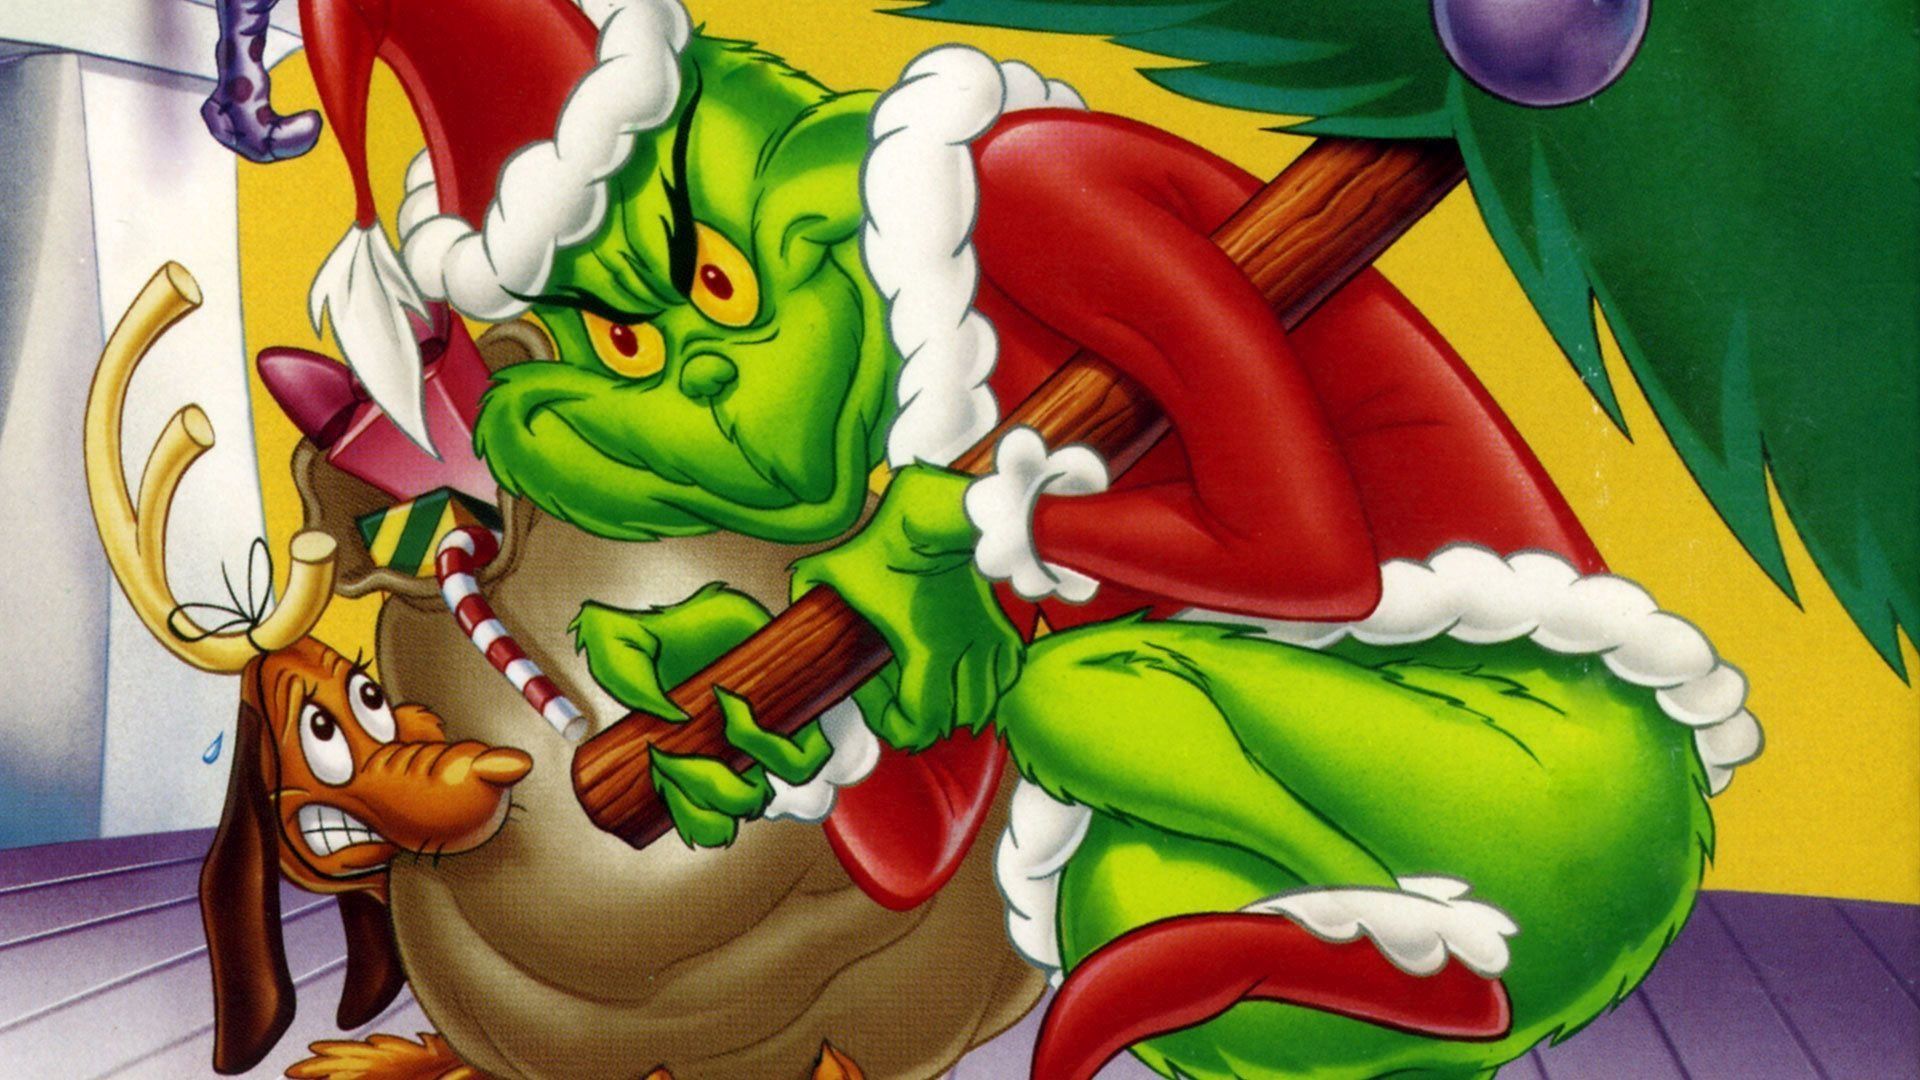 Mr. Grinch Wallpaper. Grinch Cartoon Wallpaper, Grinch Wallpaper and How the Grinch Stole Christmas Wallpaper